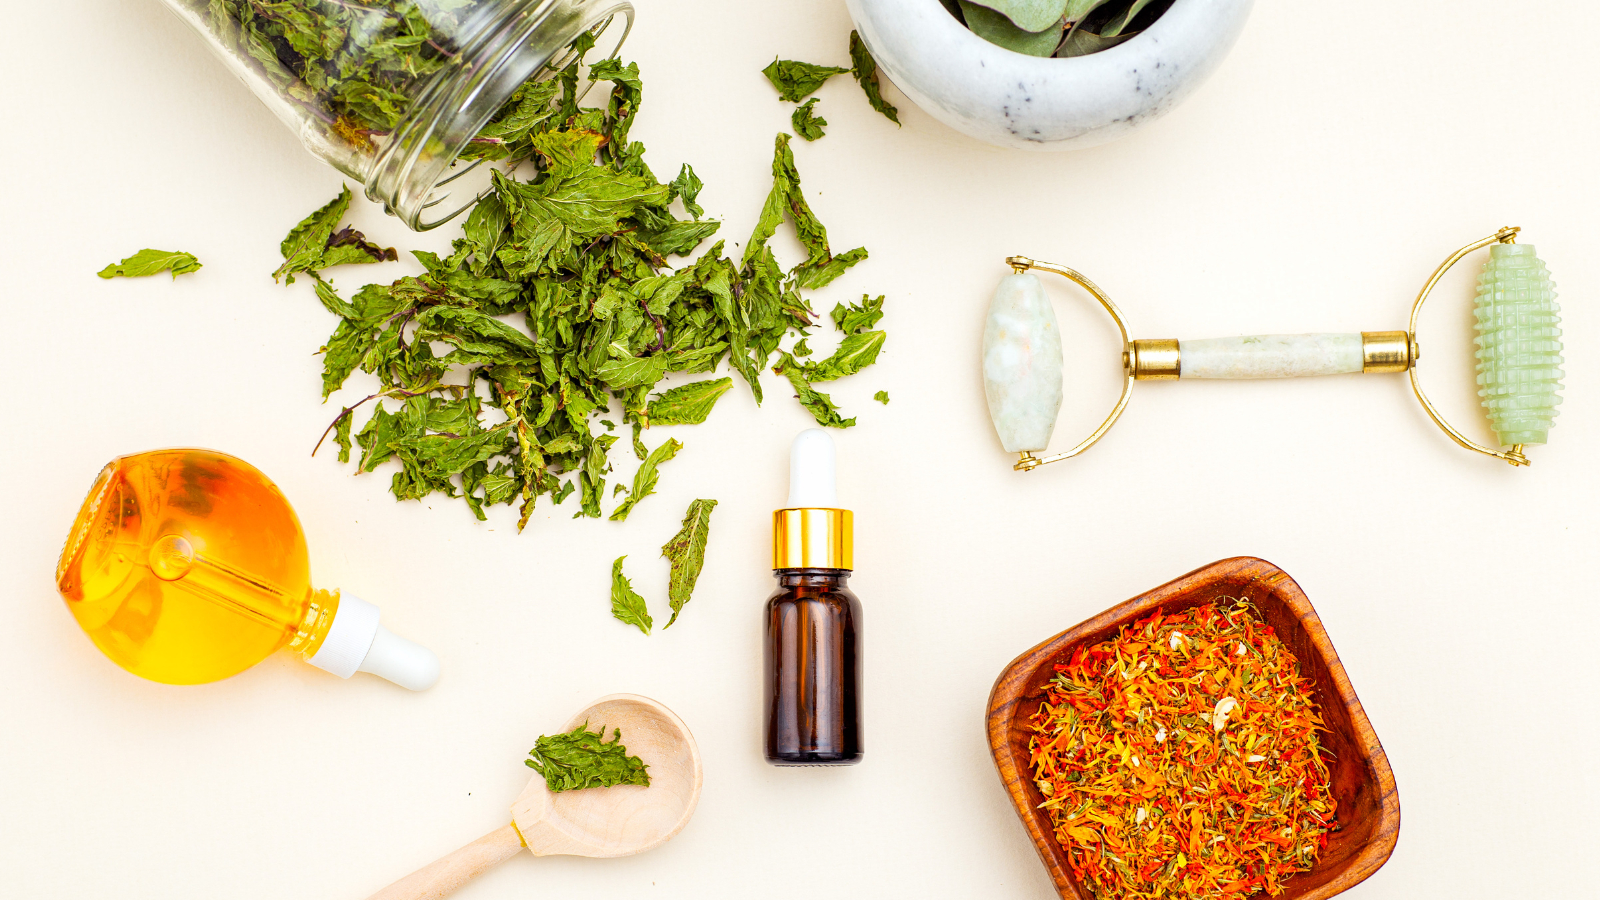 What are anti-inflammatory herbs?